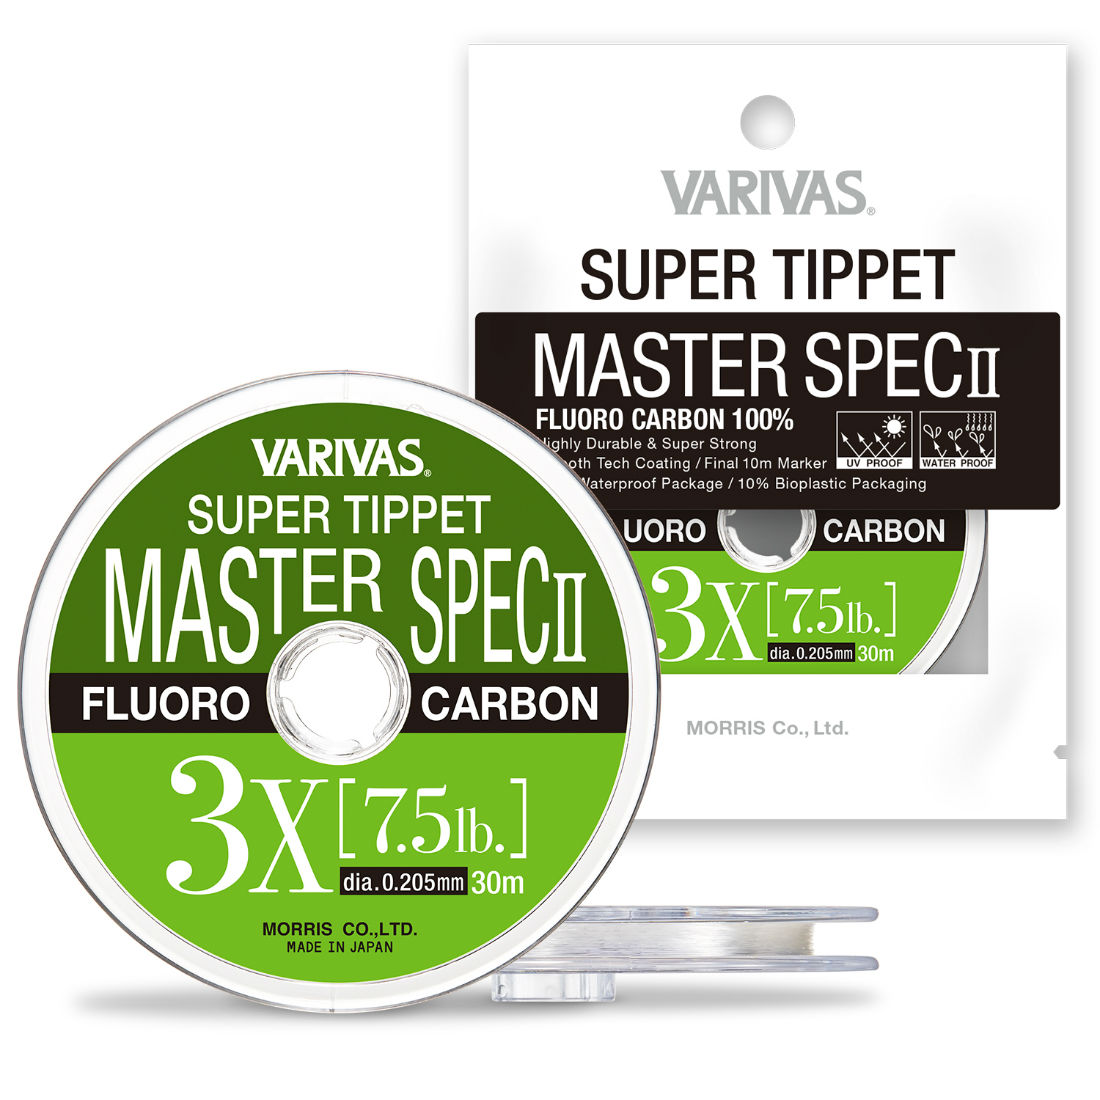 FIR VARIVAS SUPER TIPPET MASTER SPEC ll FLUORO 2X 30m 0.235mm 10.1lb